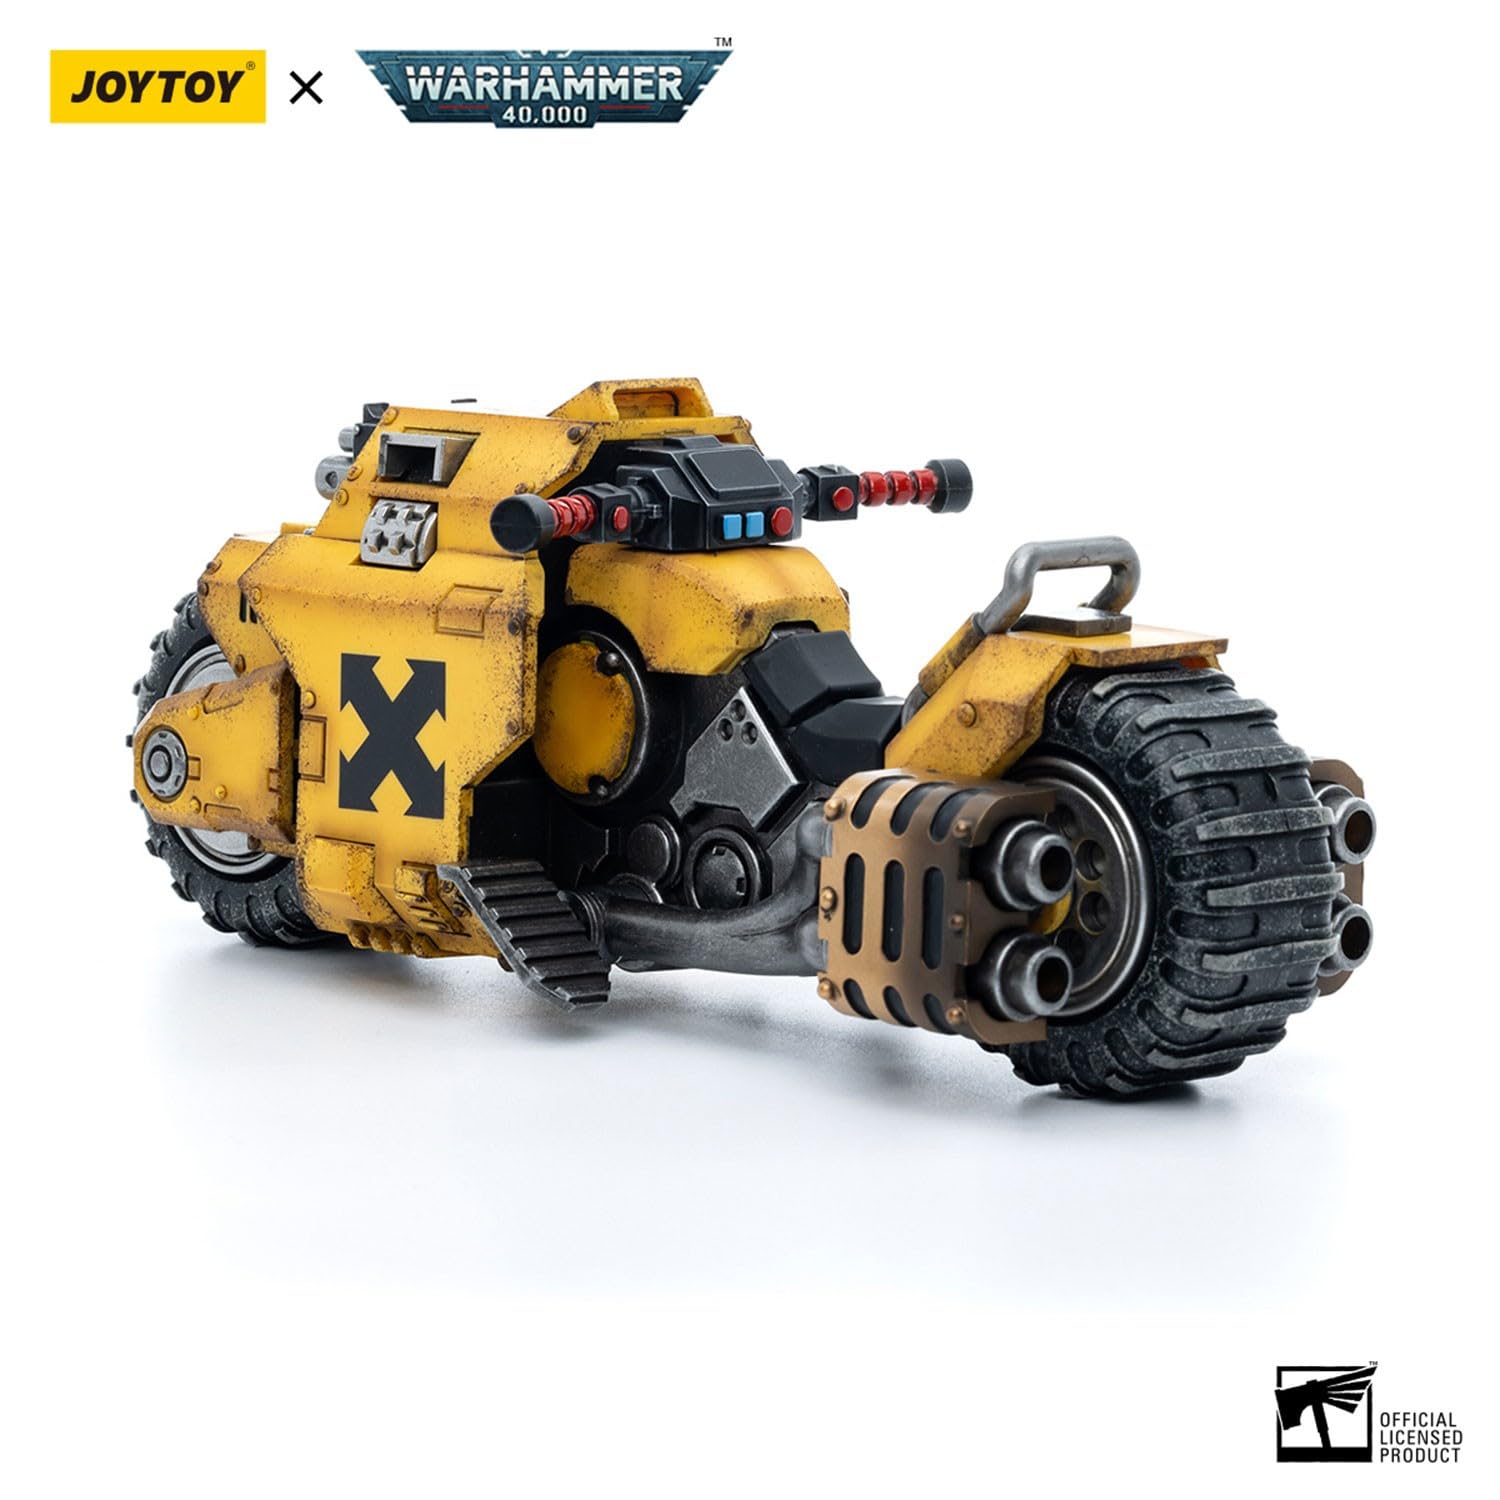 Joy Toy Warhammer 40,000 Imperial Fists Raider-Pattern Combat Bike 1:18 Scale Vehicle